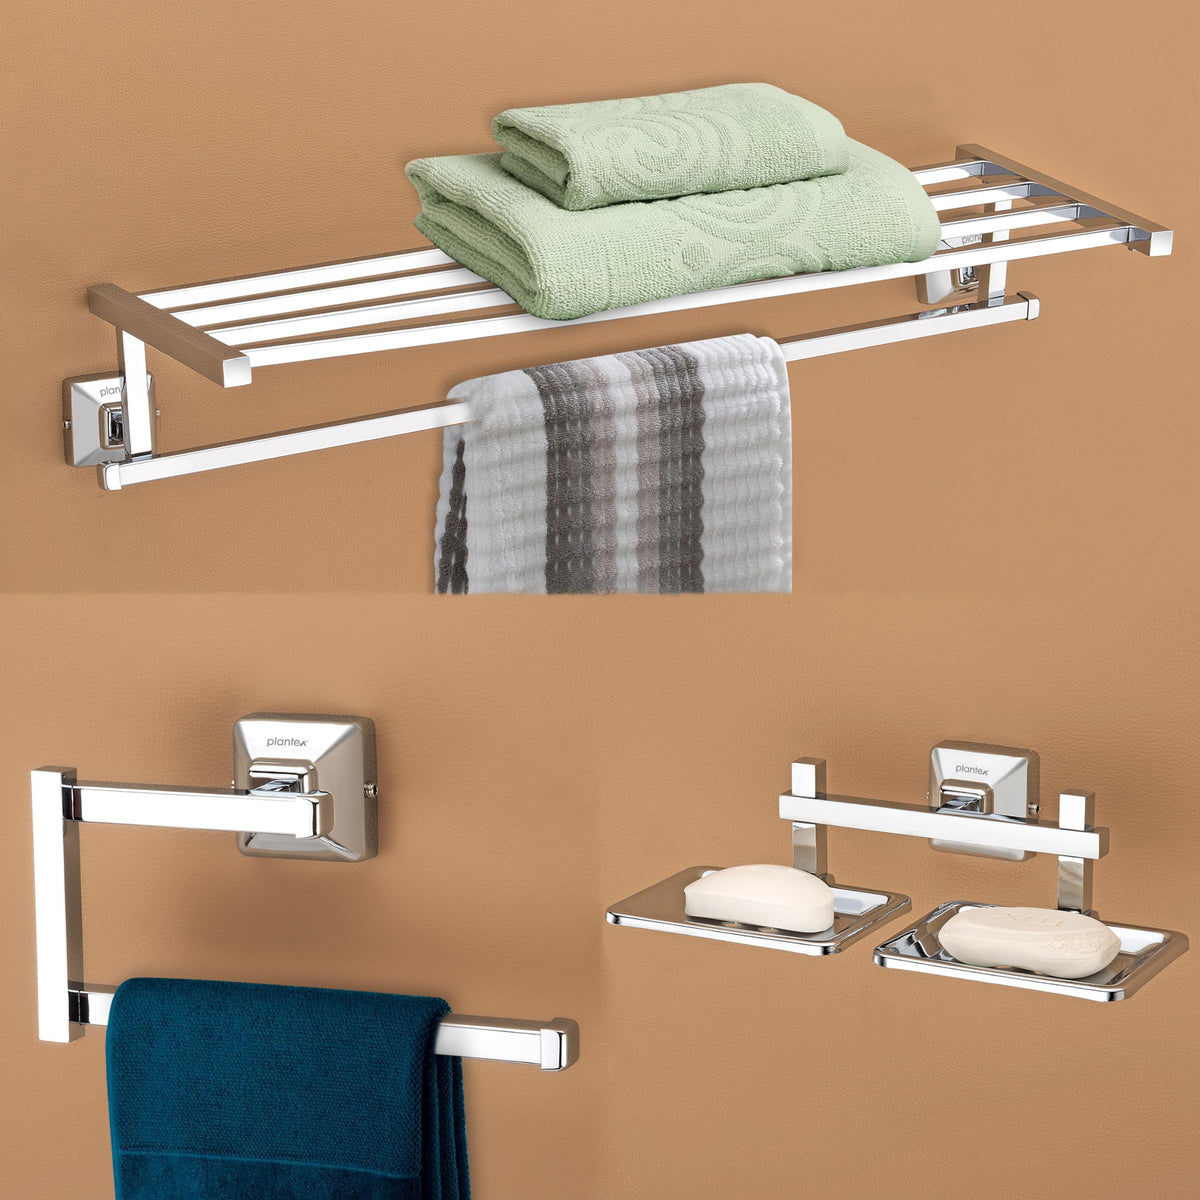 Plantex 304 Grade Stainless Steel Bathroom Accessories Set of 3 - Towel Stand/Napking Hanger/Dual Soap Holder for Bathroom - Squaro (Chrome)